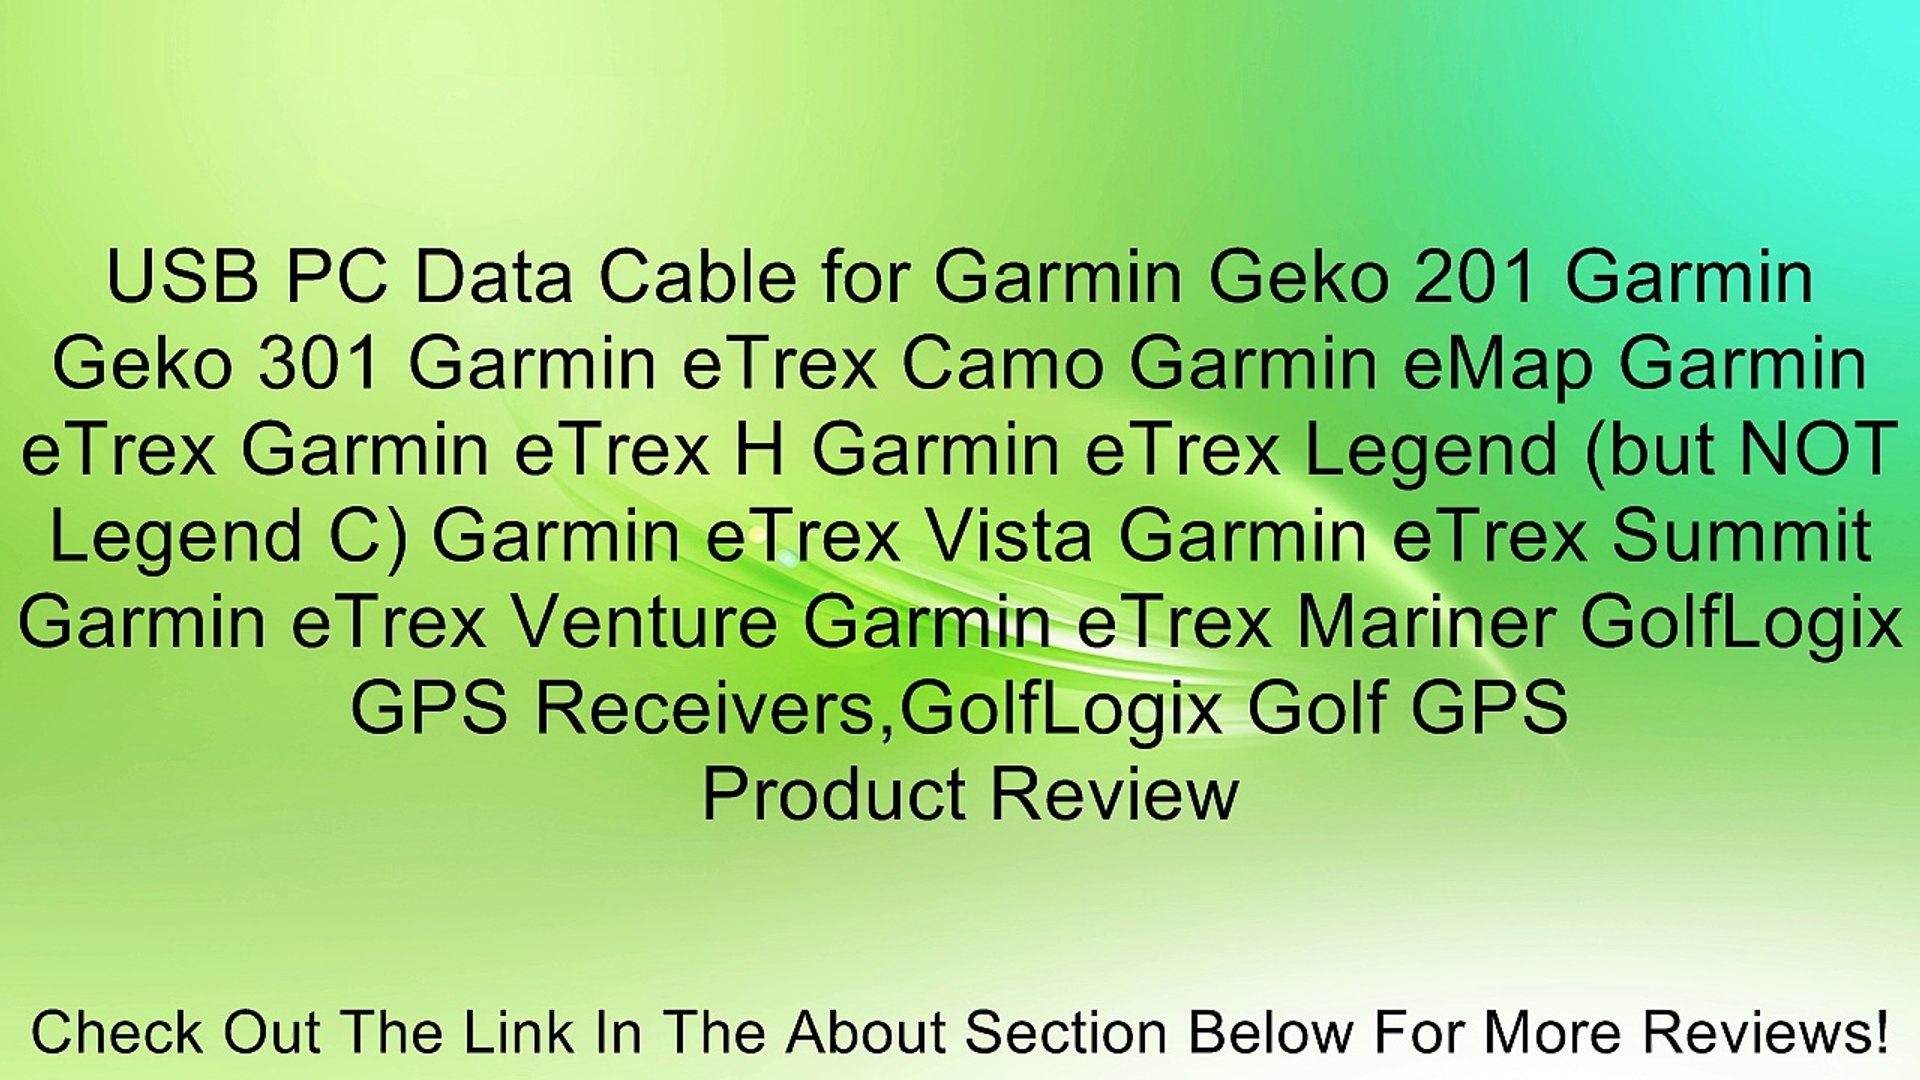 USB PC Data Cable for Garmin Geko 201 Garmin Geko 301 Garmin eTrex Camo  Garmin eMap Garmin eTrex Garmin eTrex H Garmin eTrex Legend (but NOT Legend  C) Garmin eTrex Vista Garmin